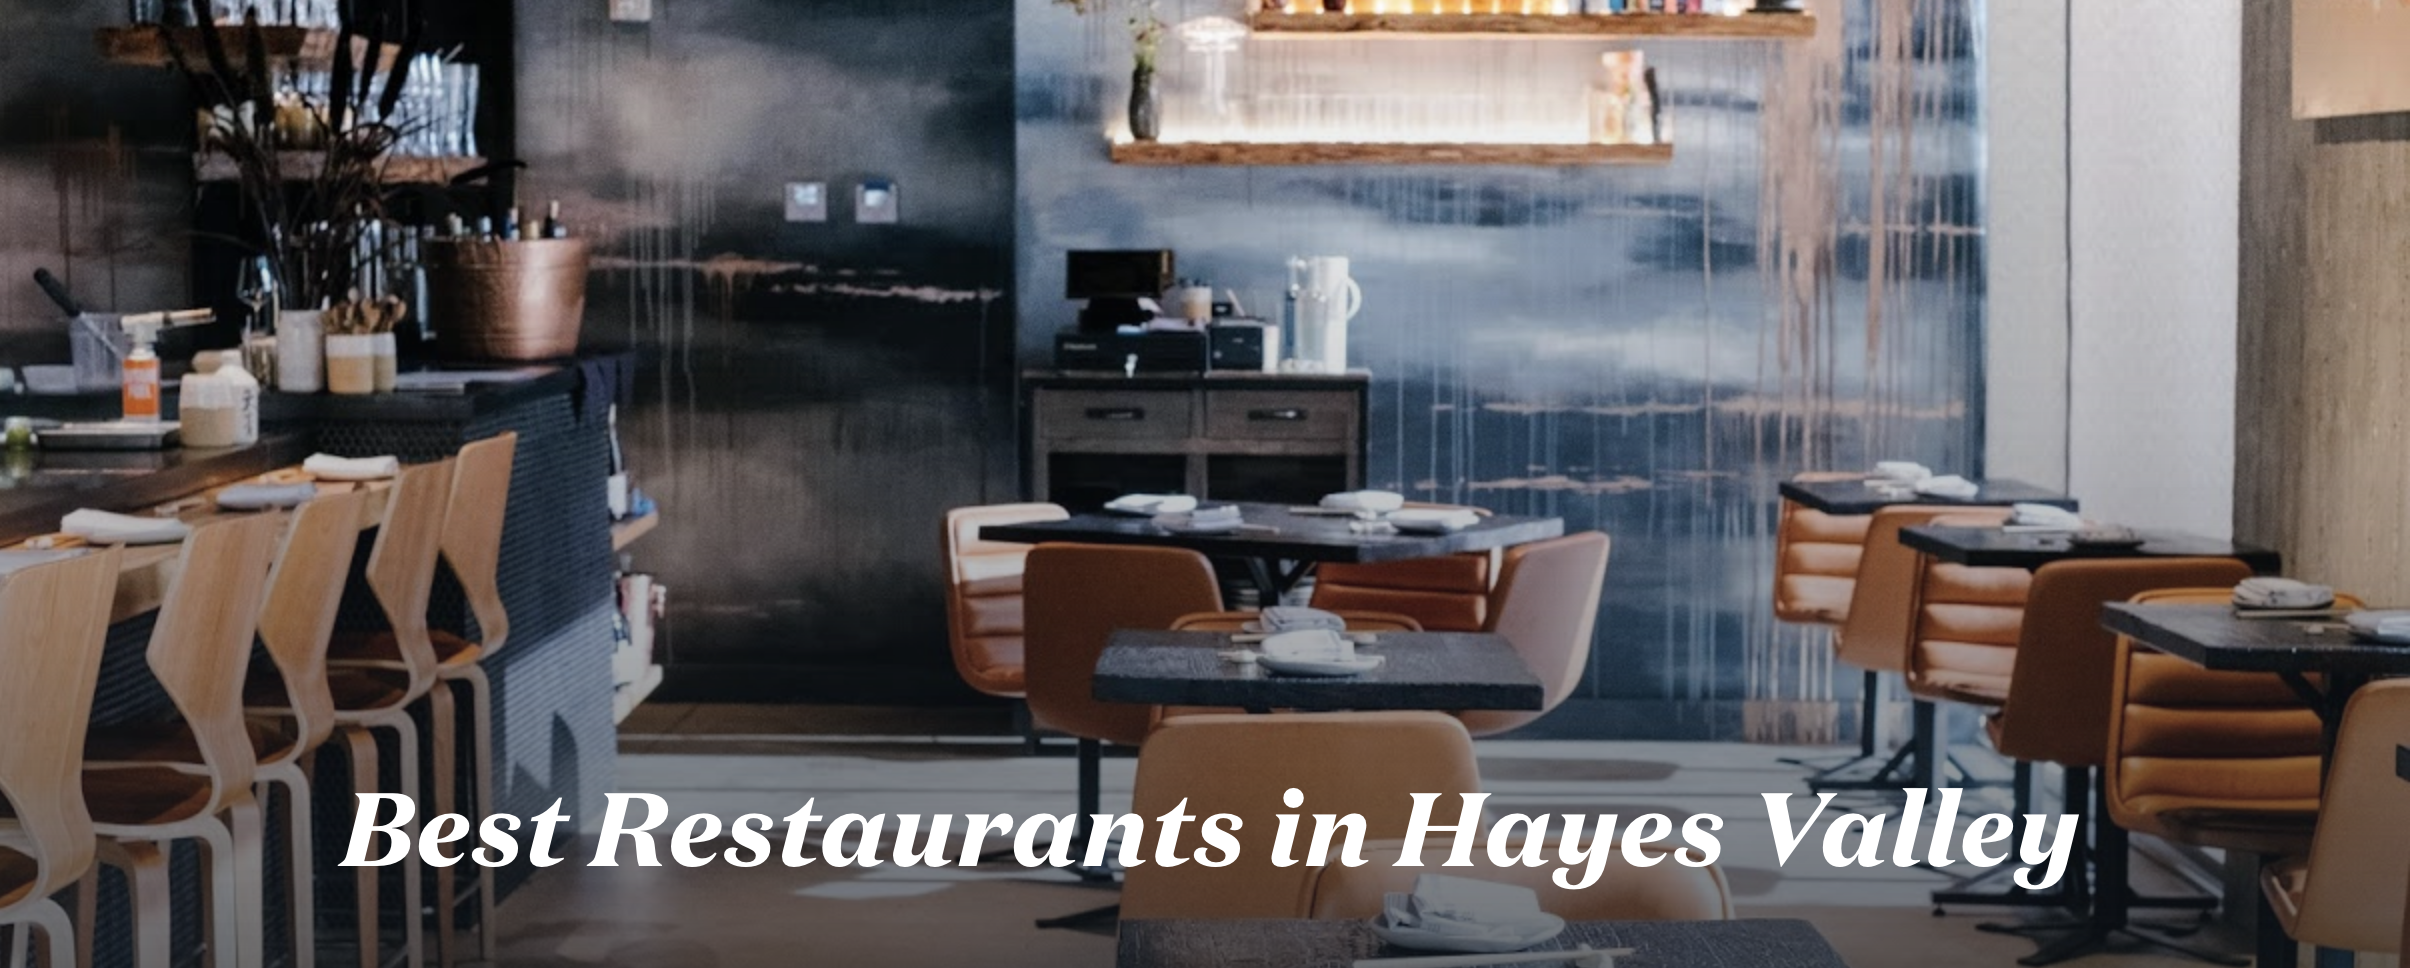 ZAGAT: The Best Restaurants in Hayes Valley